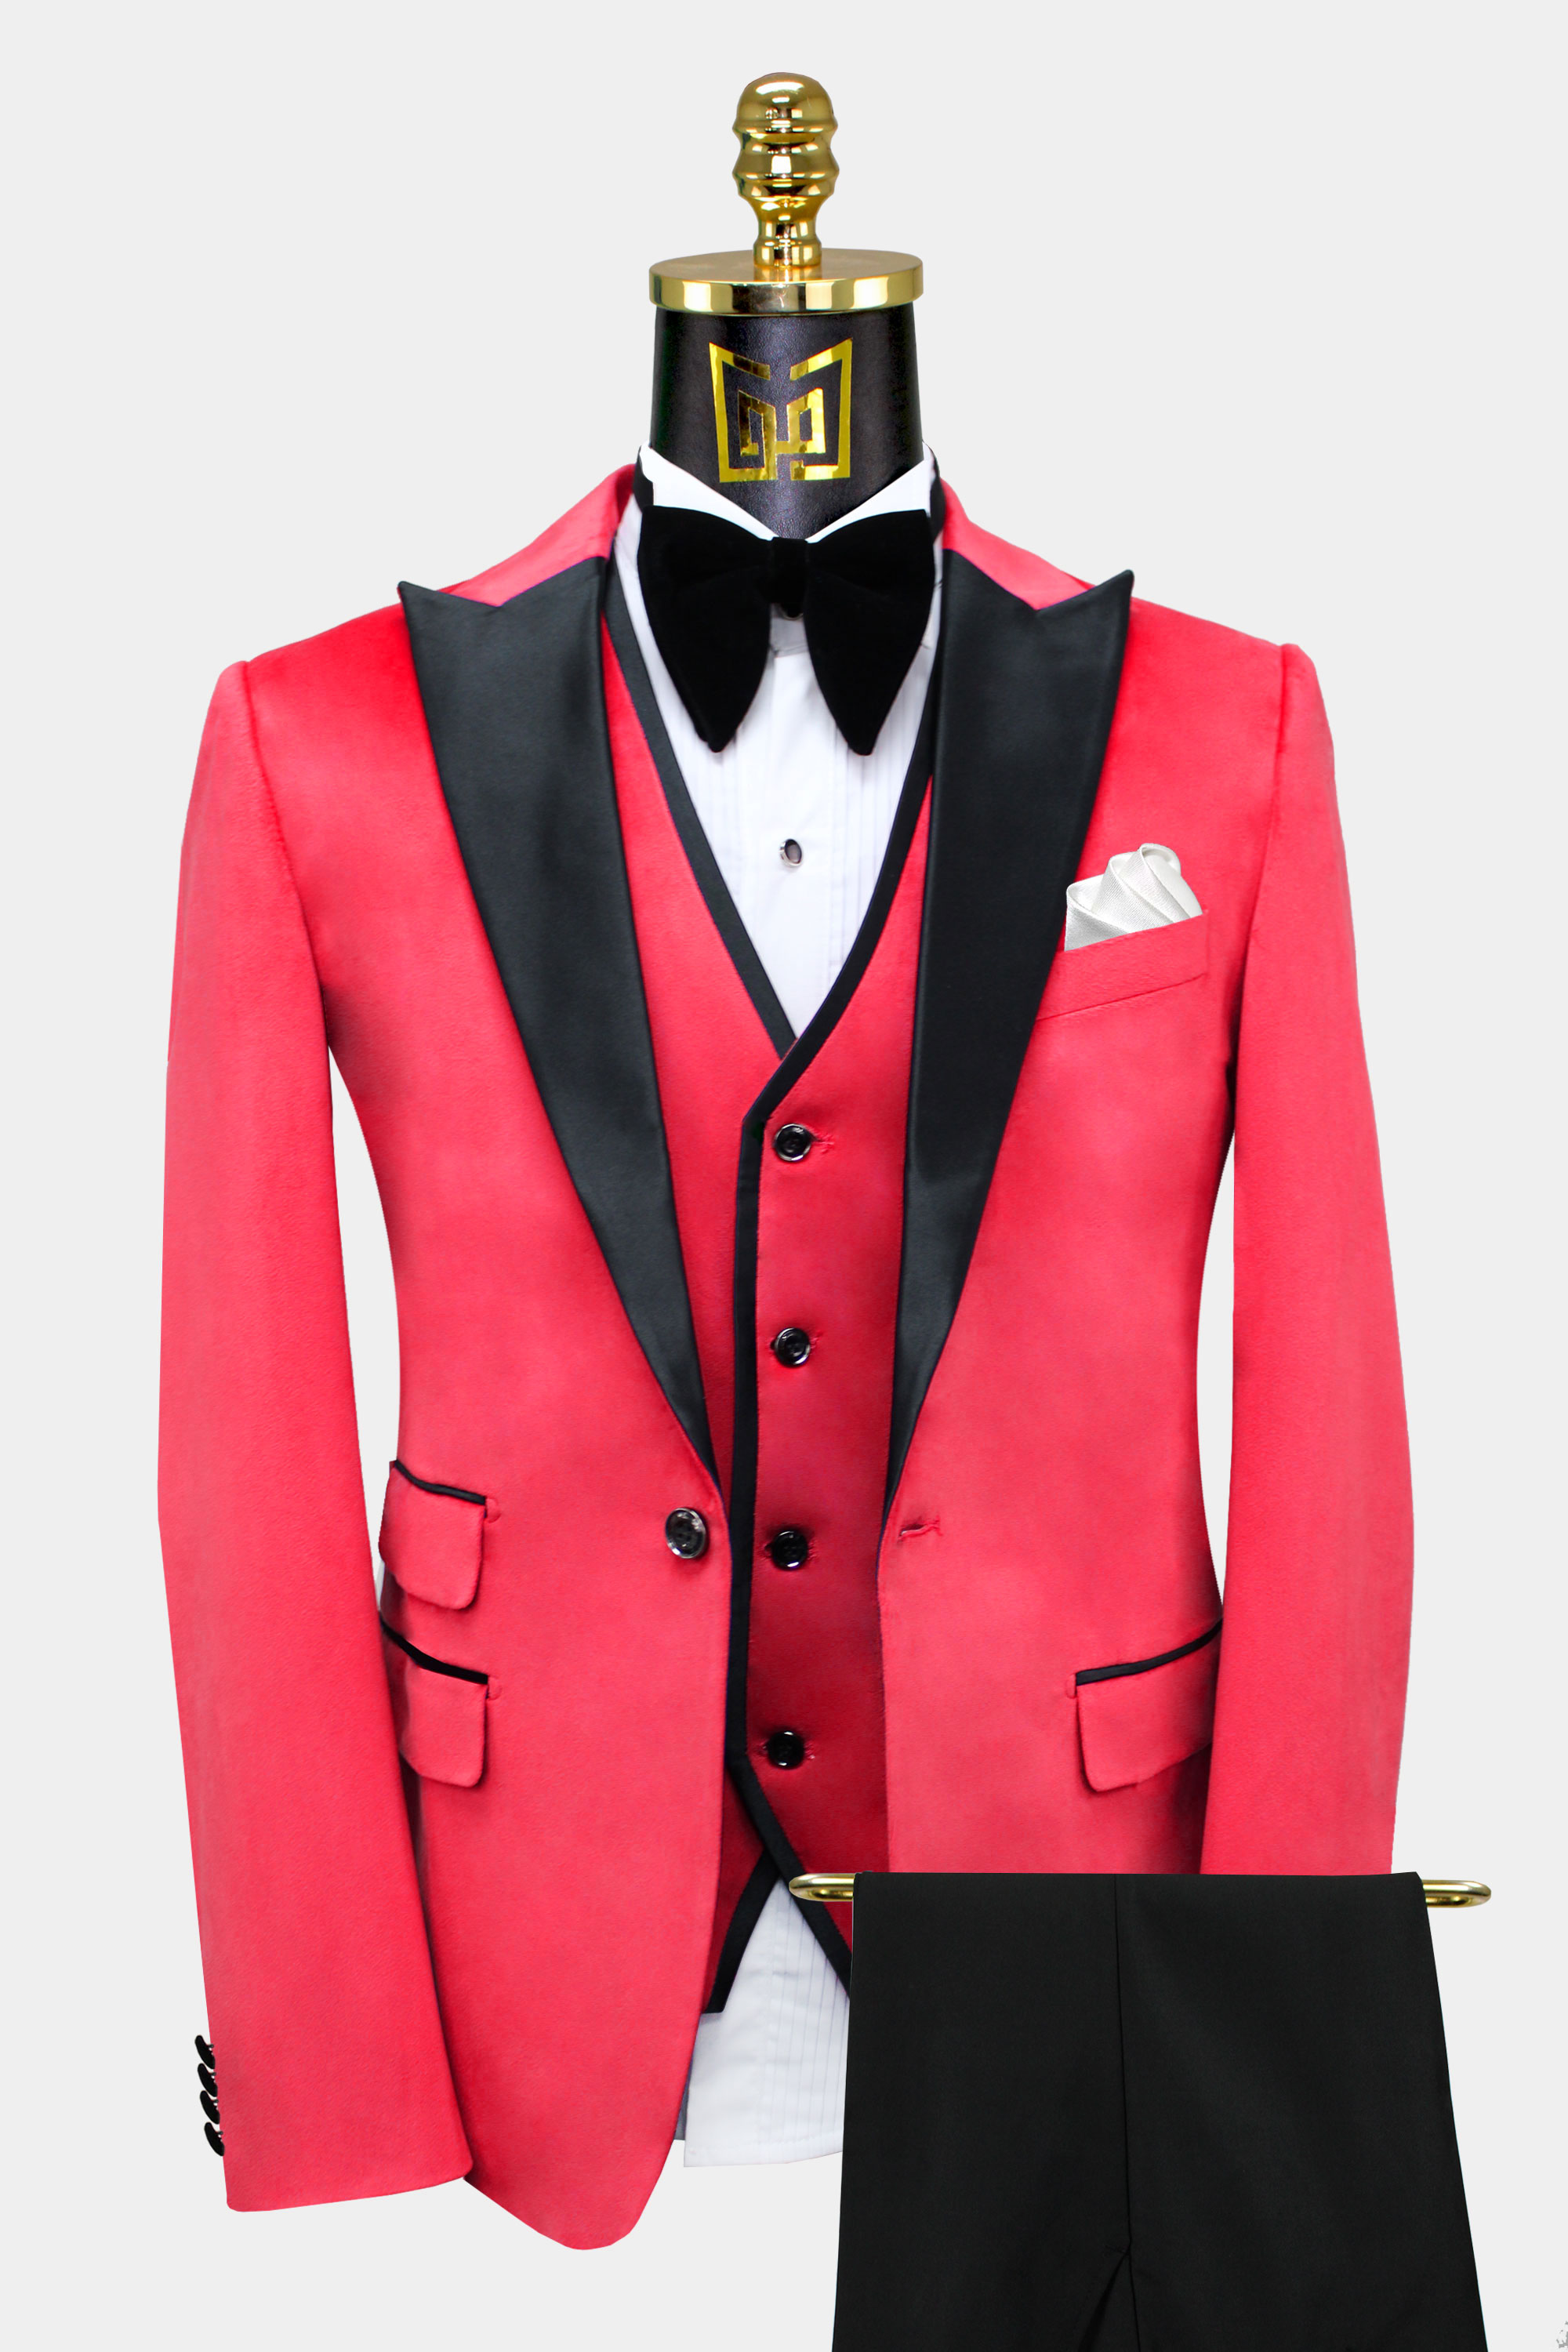 Mens-Red-Velvet-Tuxedo-Suit-Prom-Outfit-from-Gentlemansguru.com